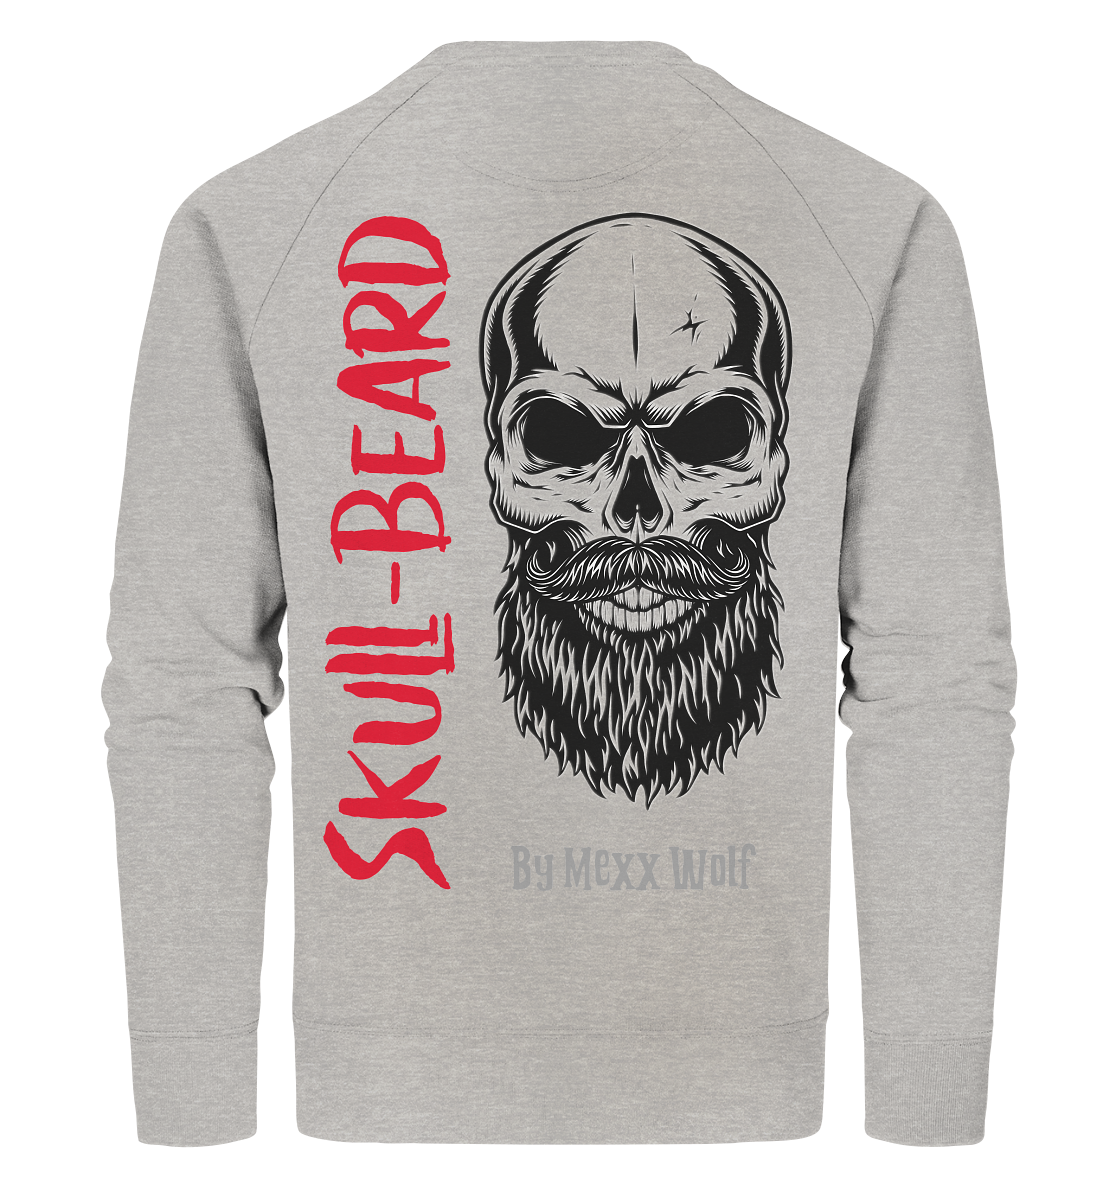 Skull-Beard by MW - Organic Sweatshirt